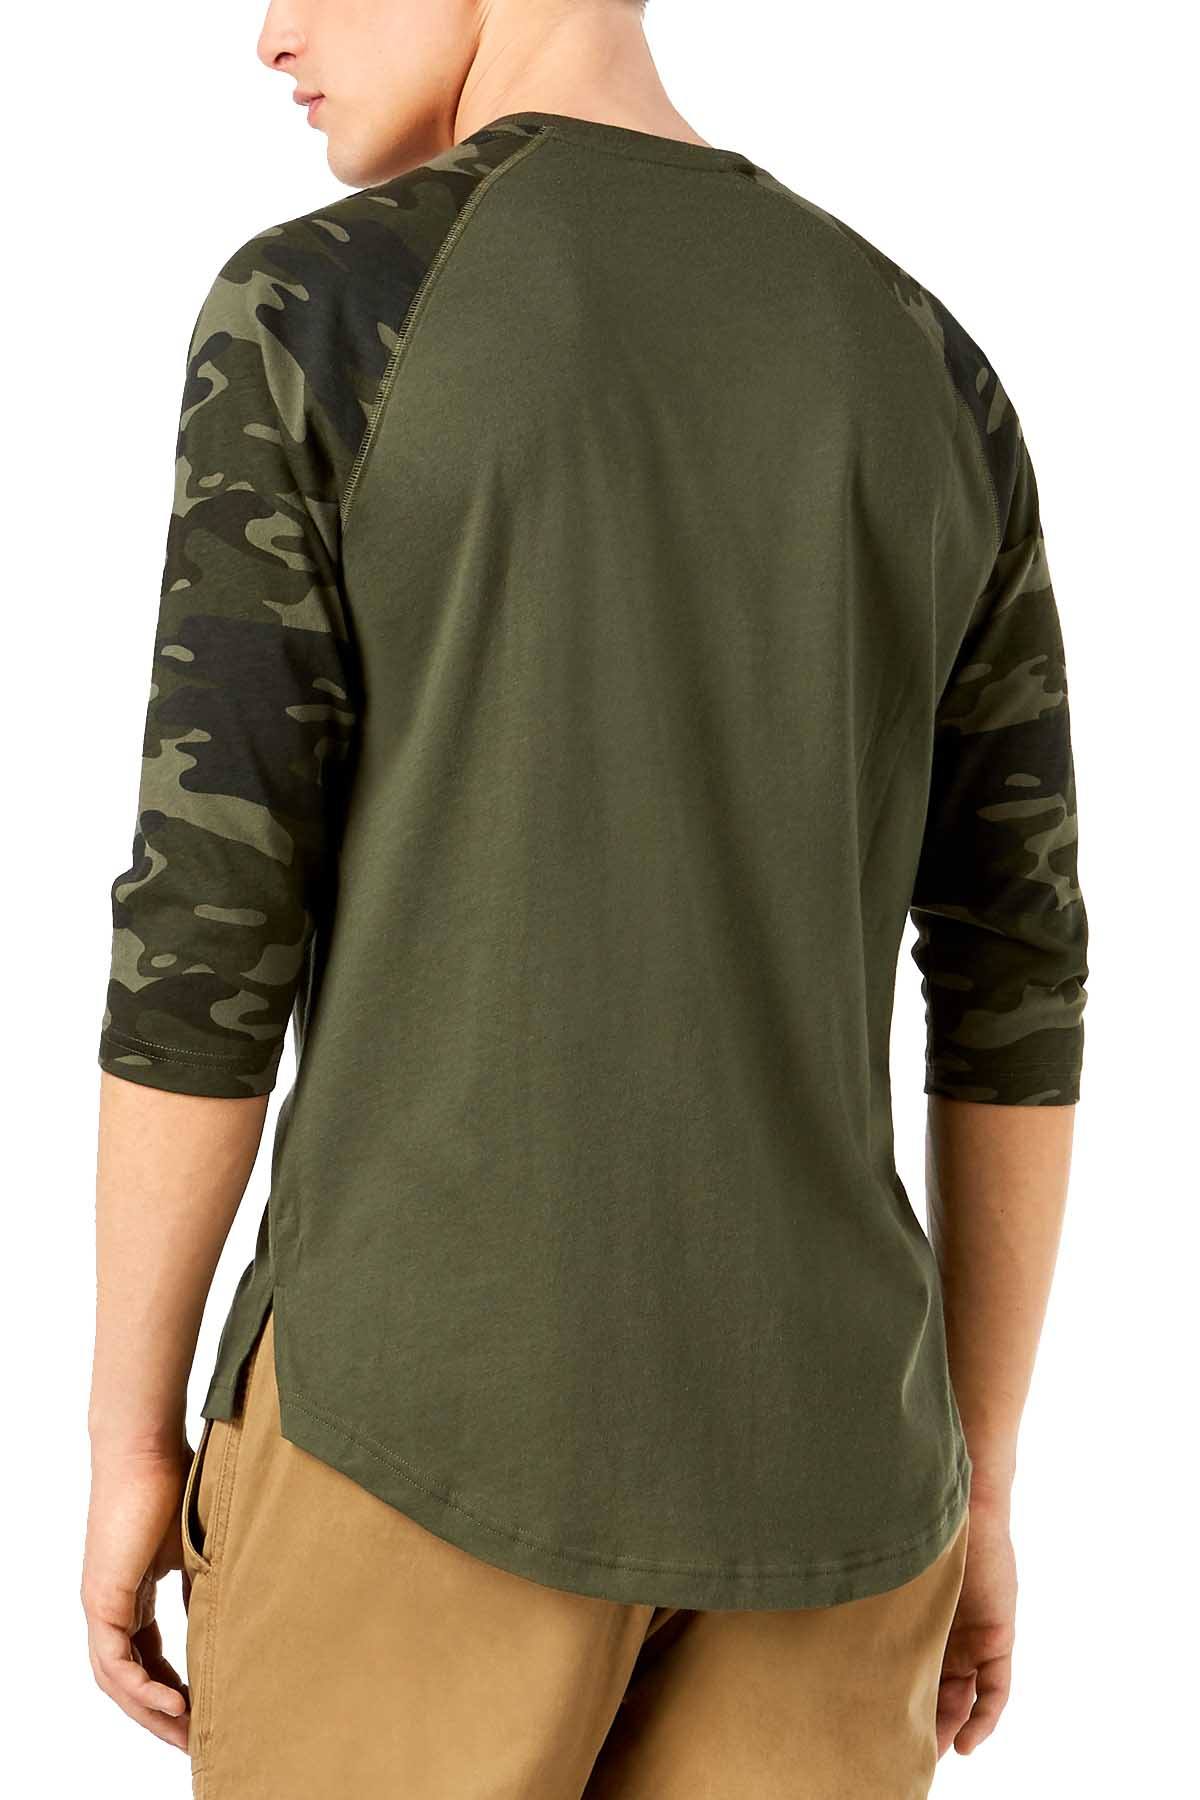 American Rag Forest Night/Camo Raglan Sleeve T-Shirt